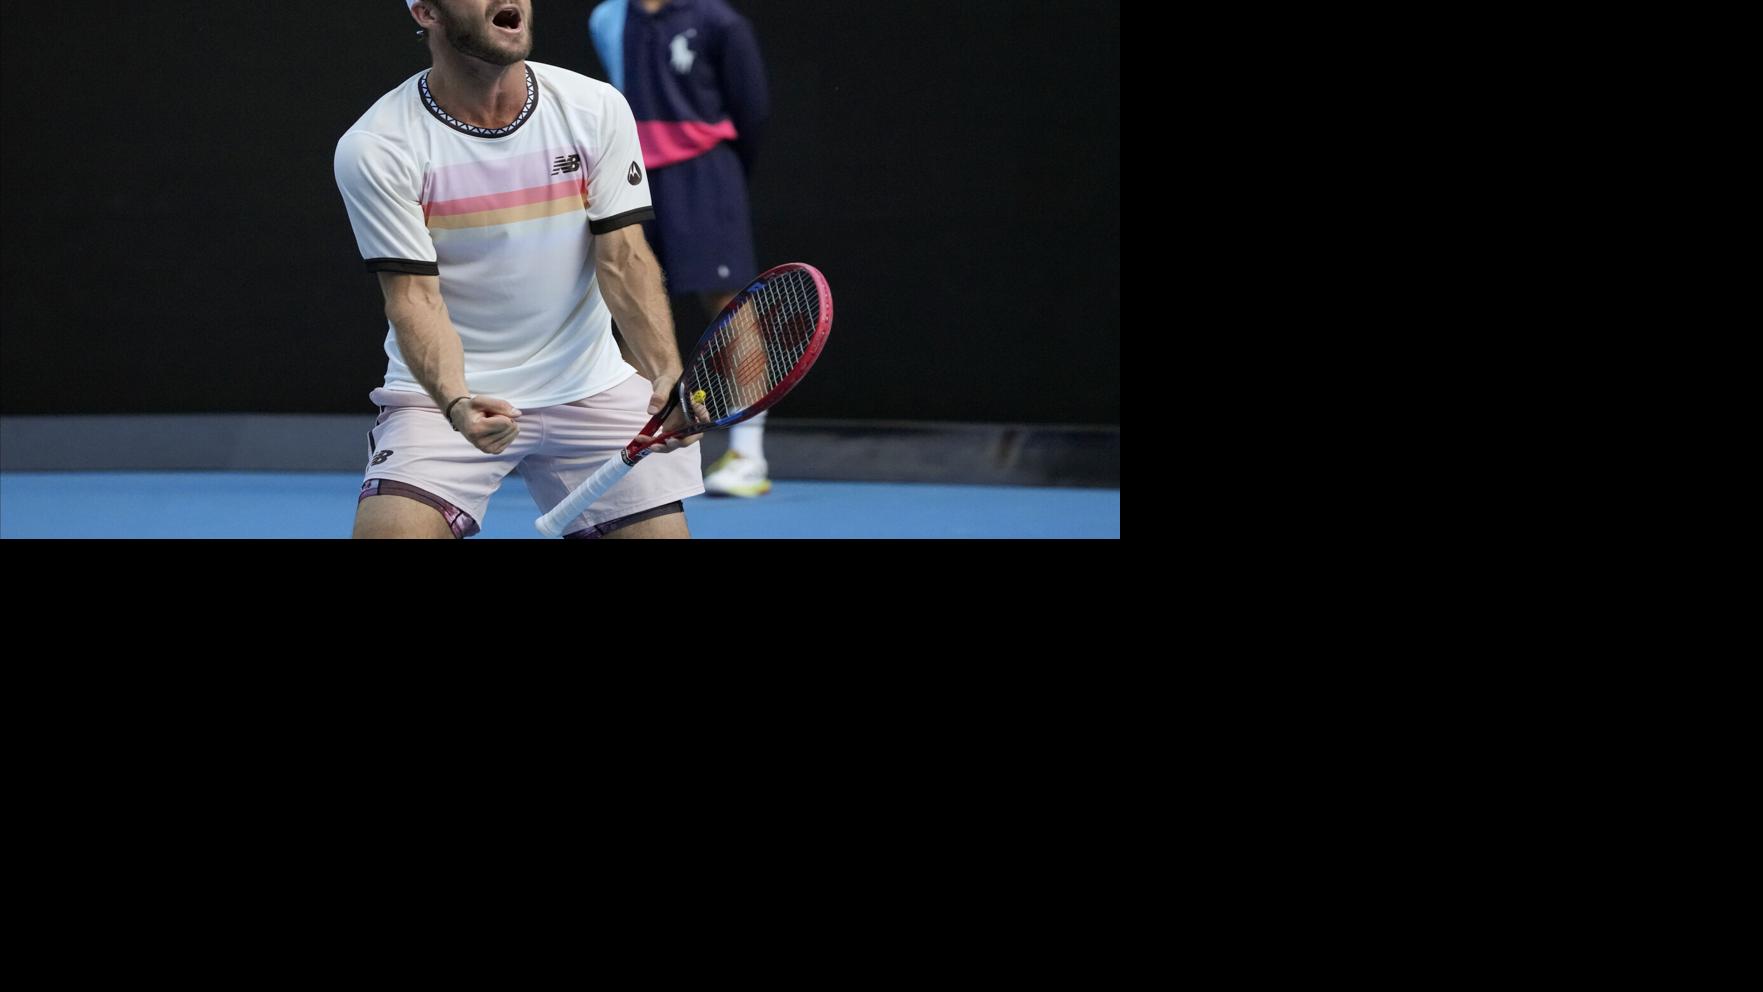 Paul tops Shelton at Australian Open, faces Djokovic next